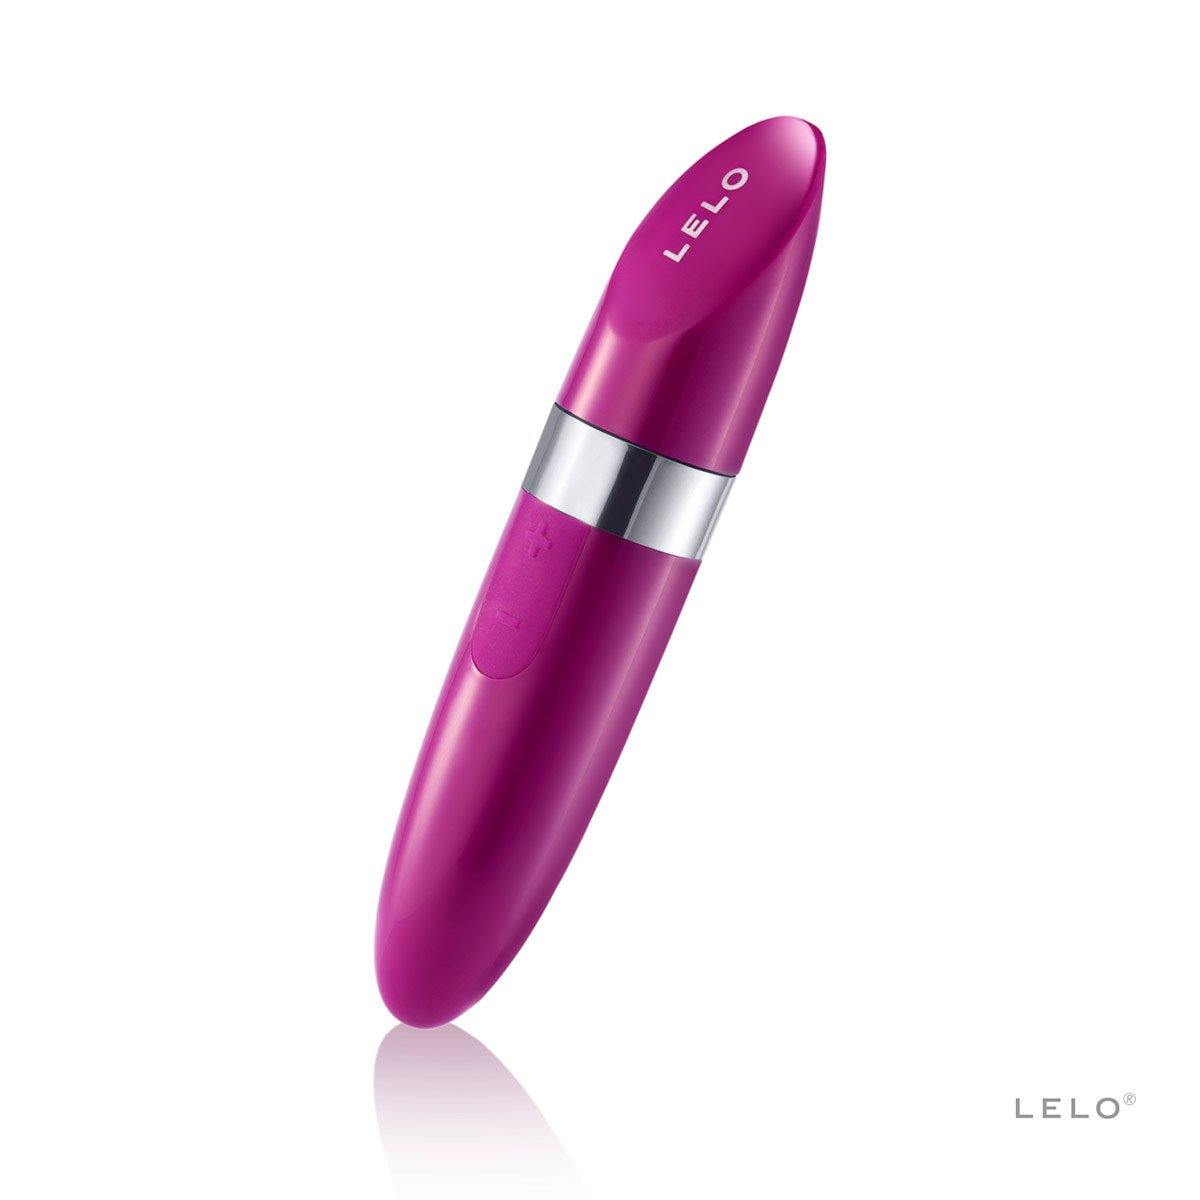 Lelo Mia 2 - Buy At Luxury Toy X - Free 3-Day Shipping